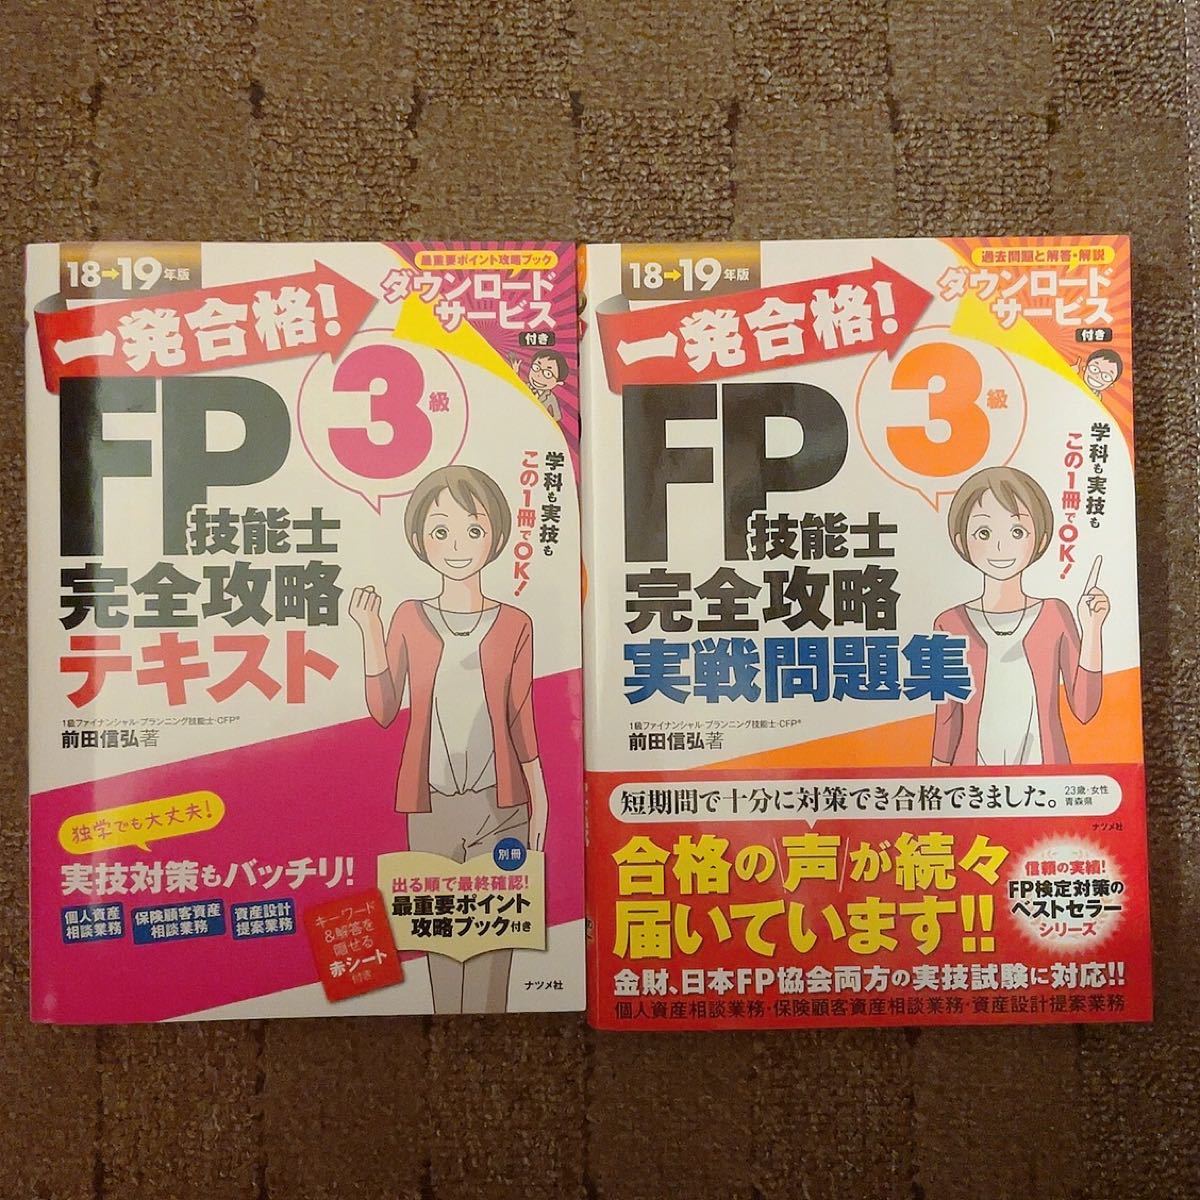 FP3級(ファイナンシャルプランナー)テキスト、実践問題集の2冊セット